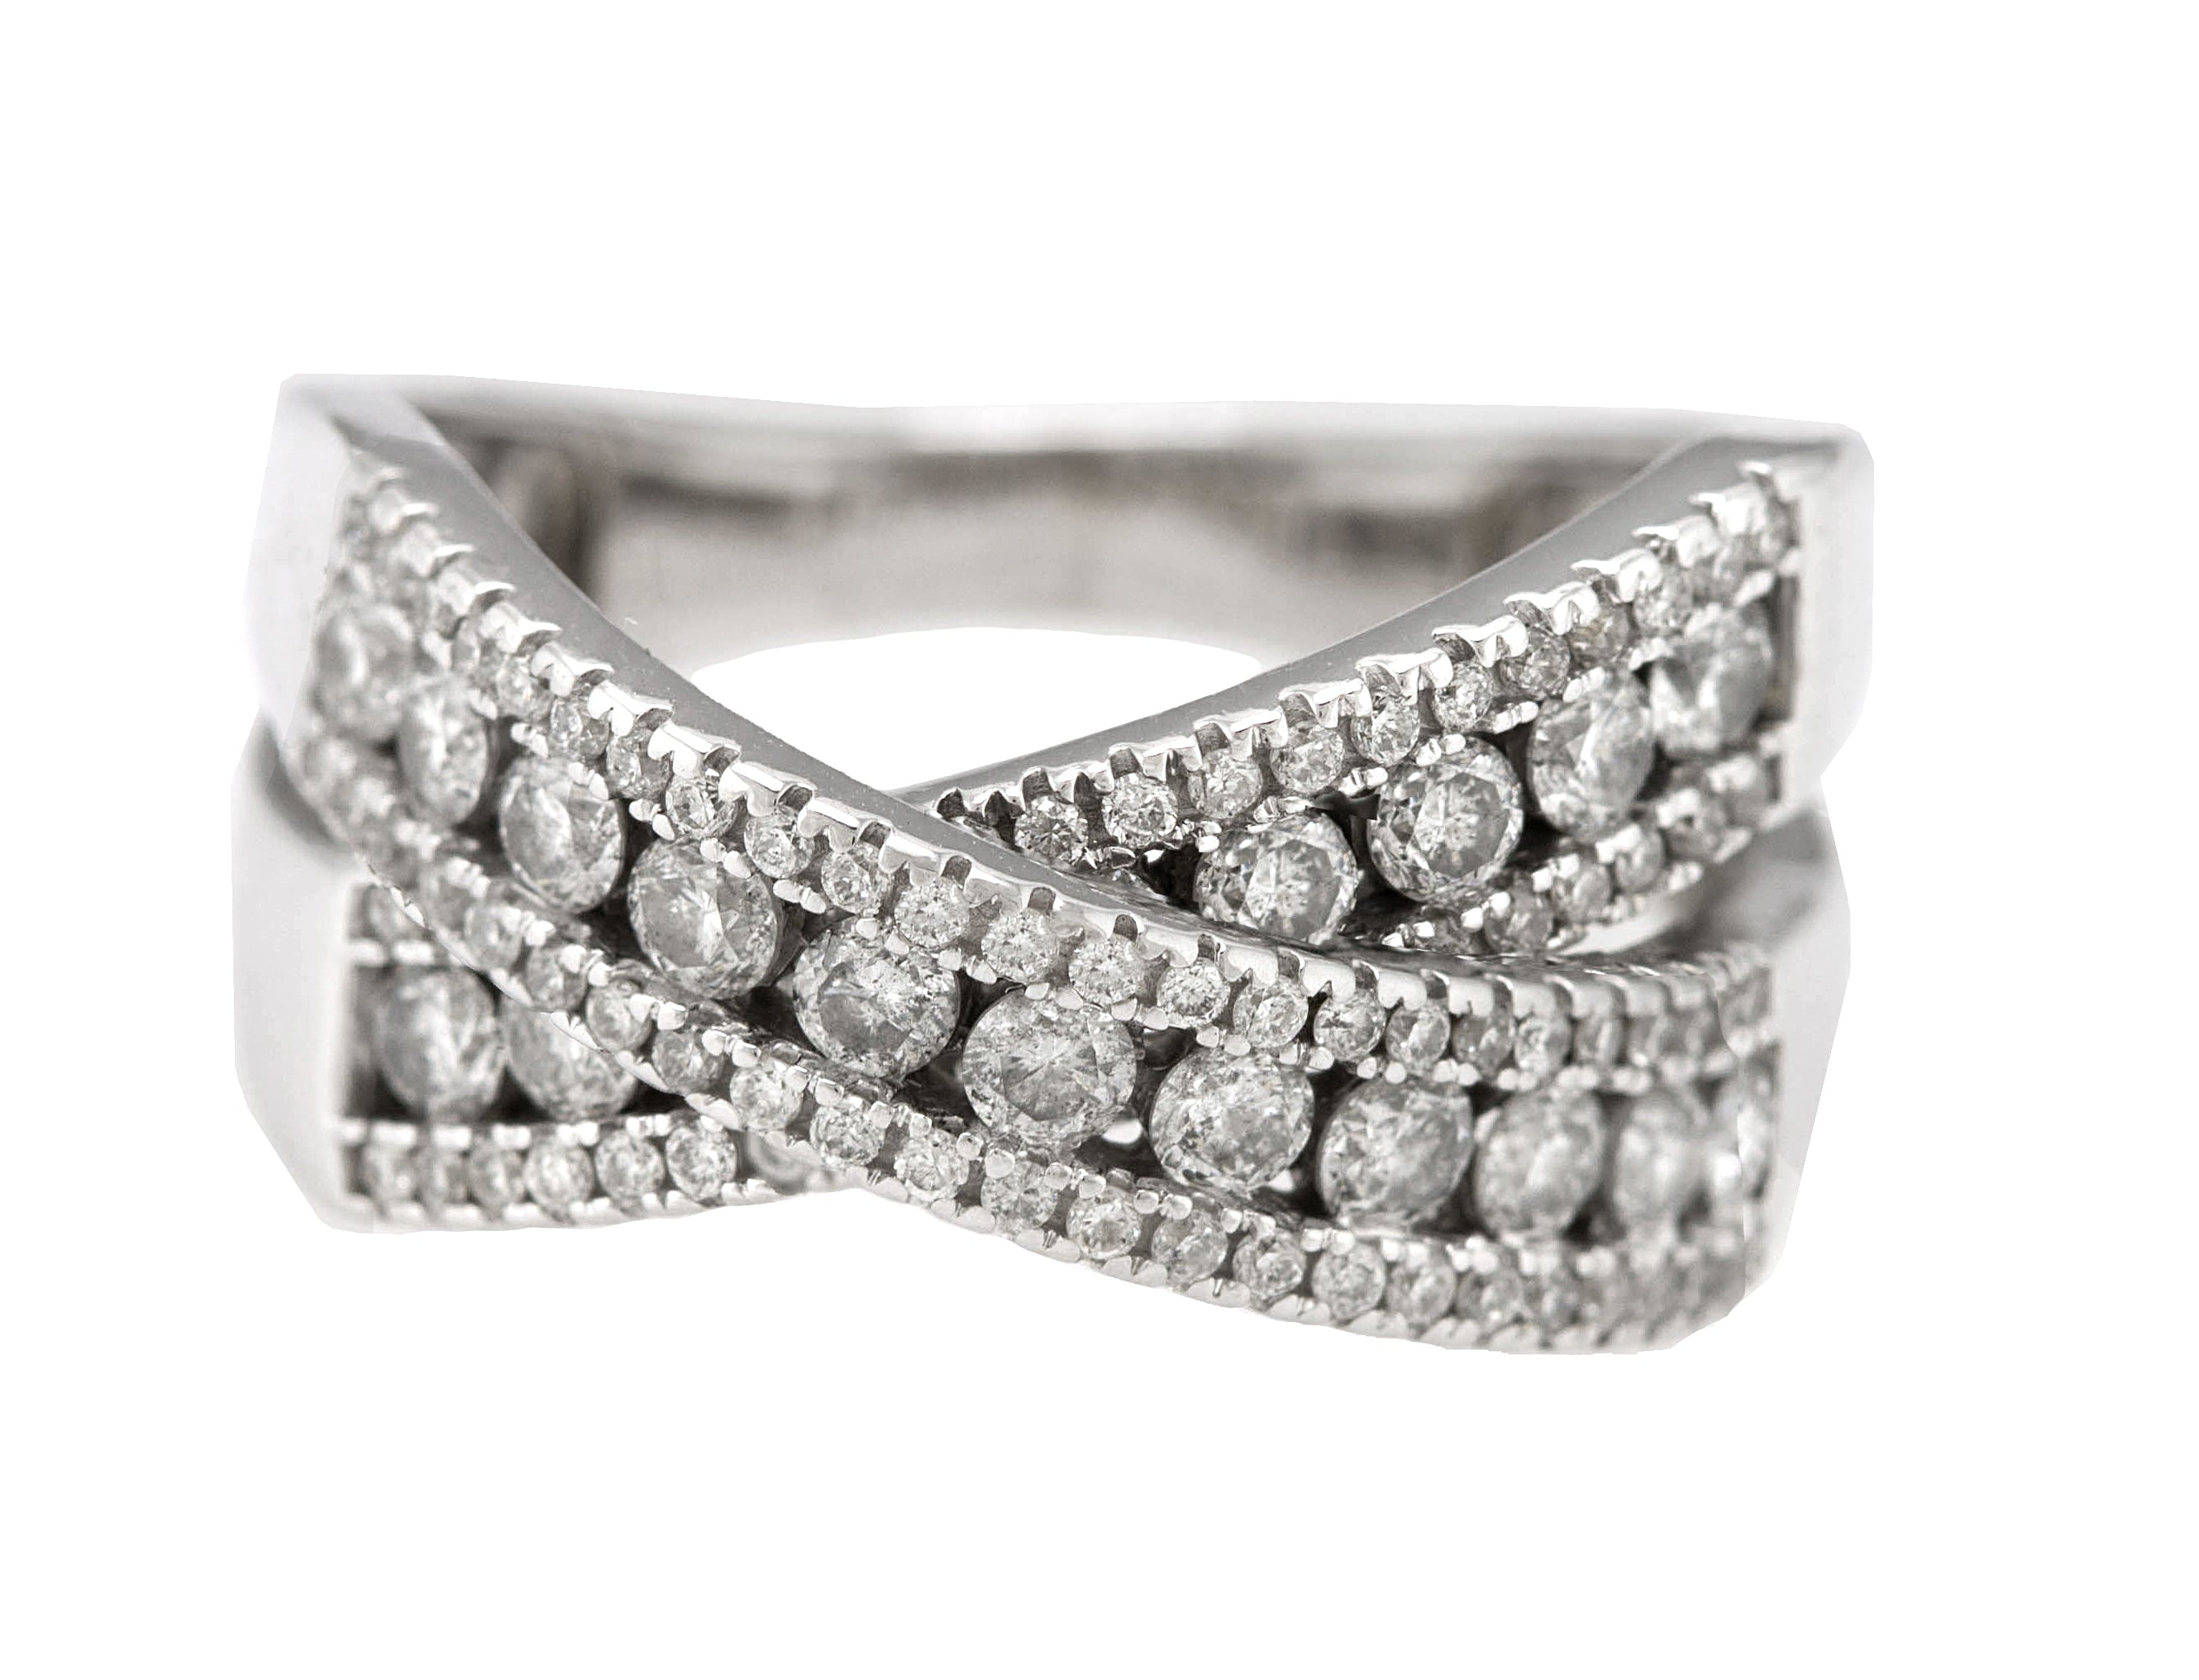 Exquisite Ladies 14K White Gold 1.76ctw Diamond Crossover "X" Cocktail Ring